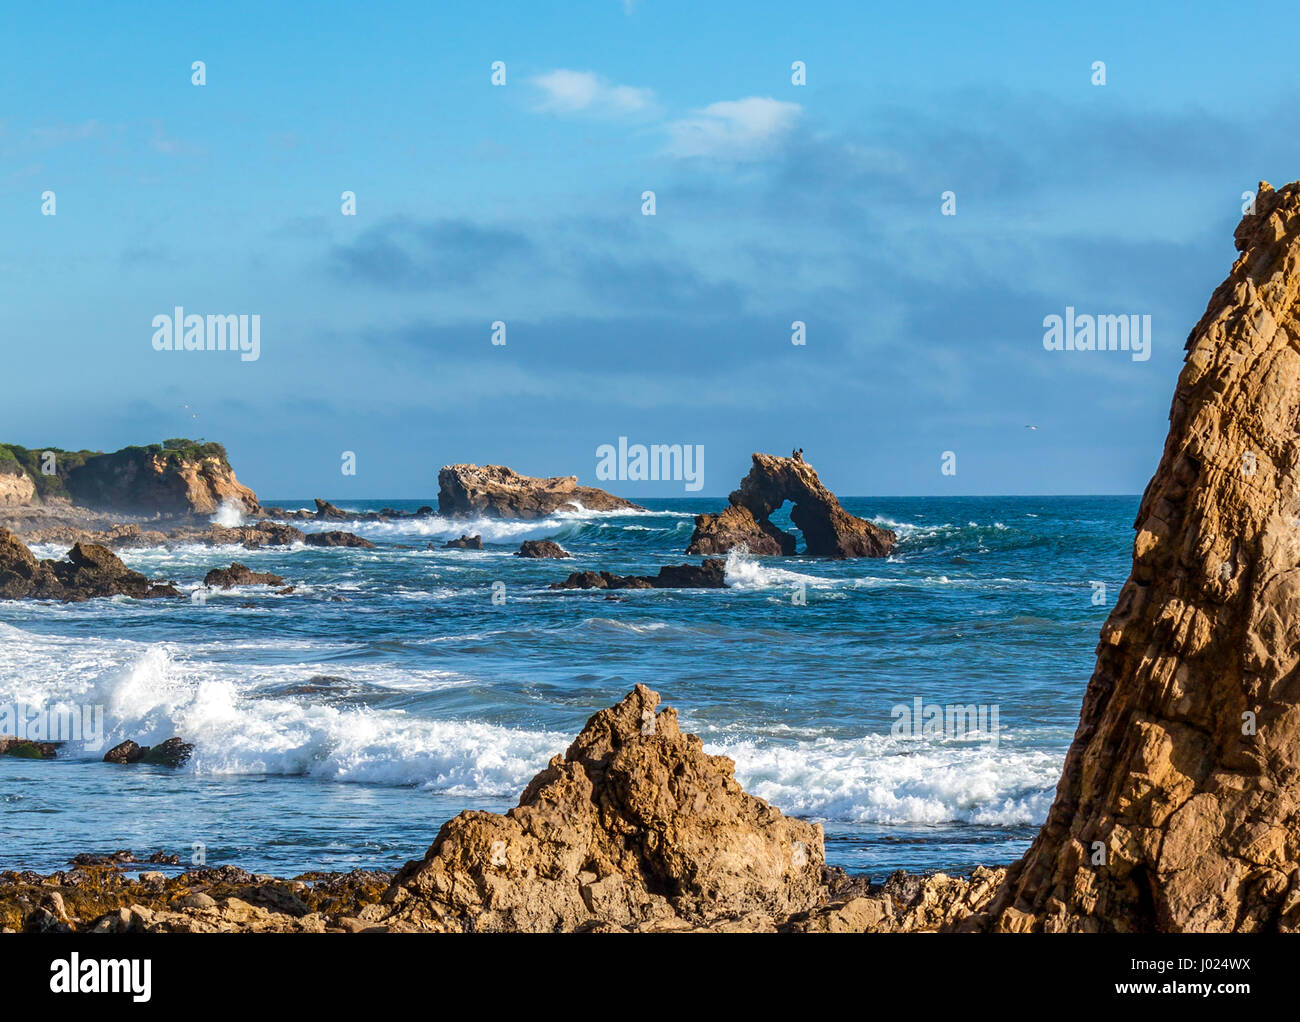 waves crashing on rocky coastline in Newport Beach California Stock Photo